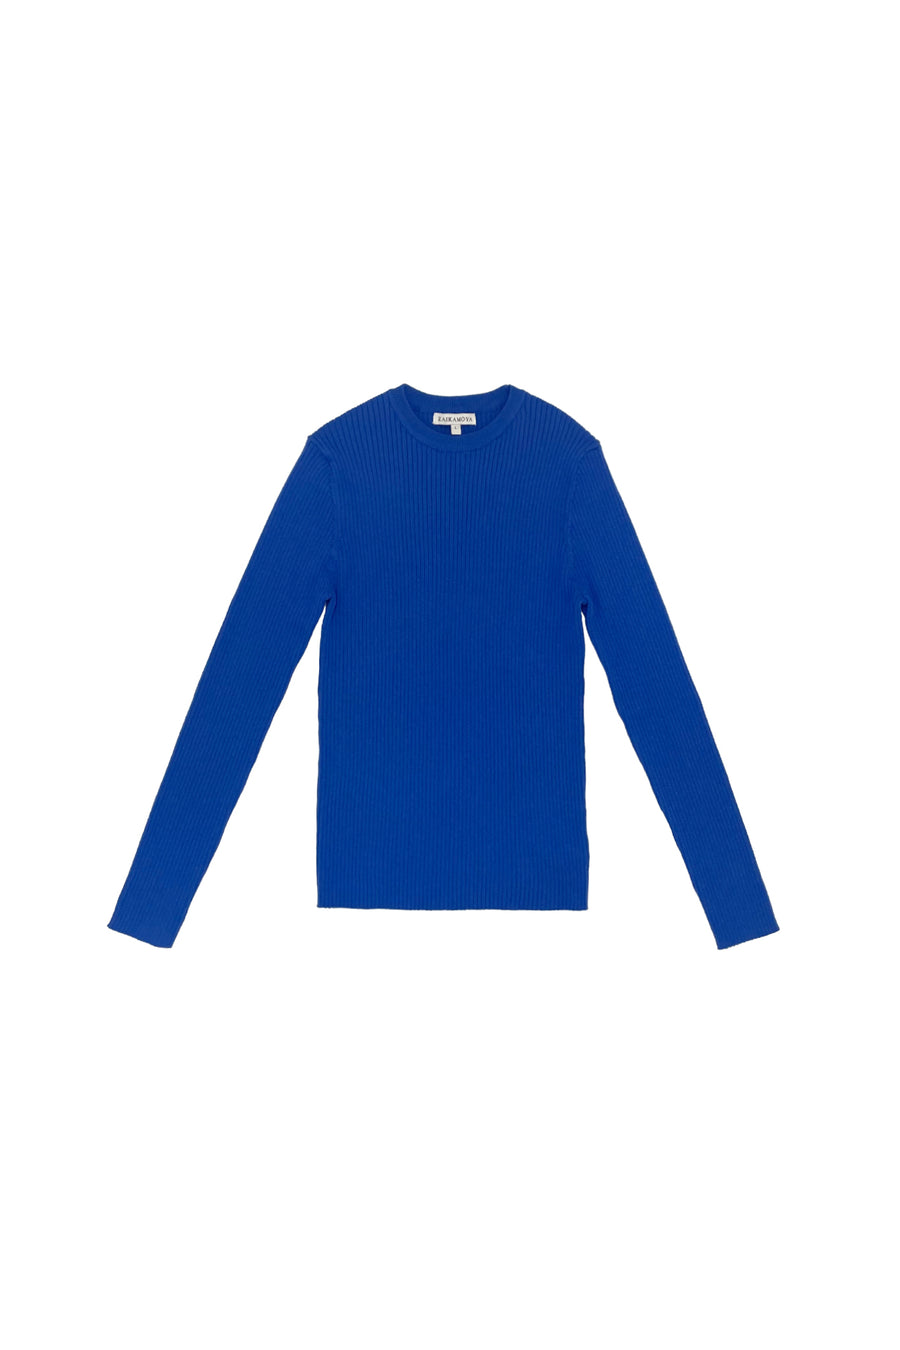 Blue small ribbed sweater by Zaikamoya